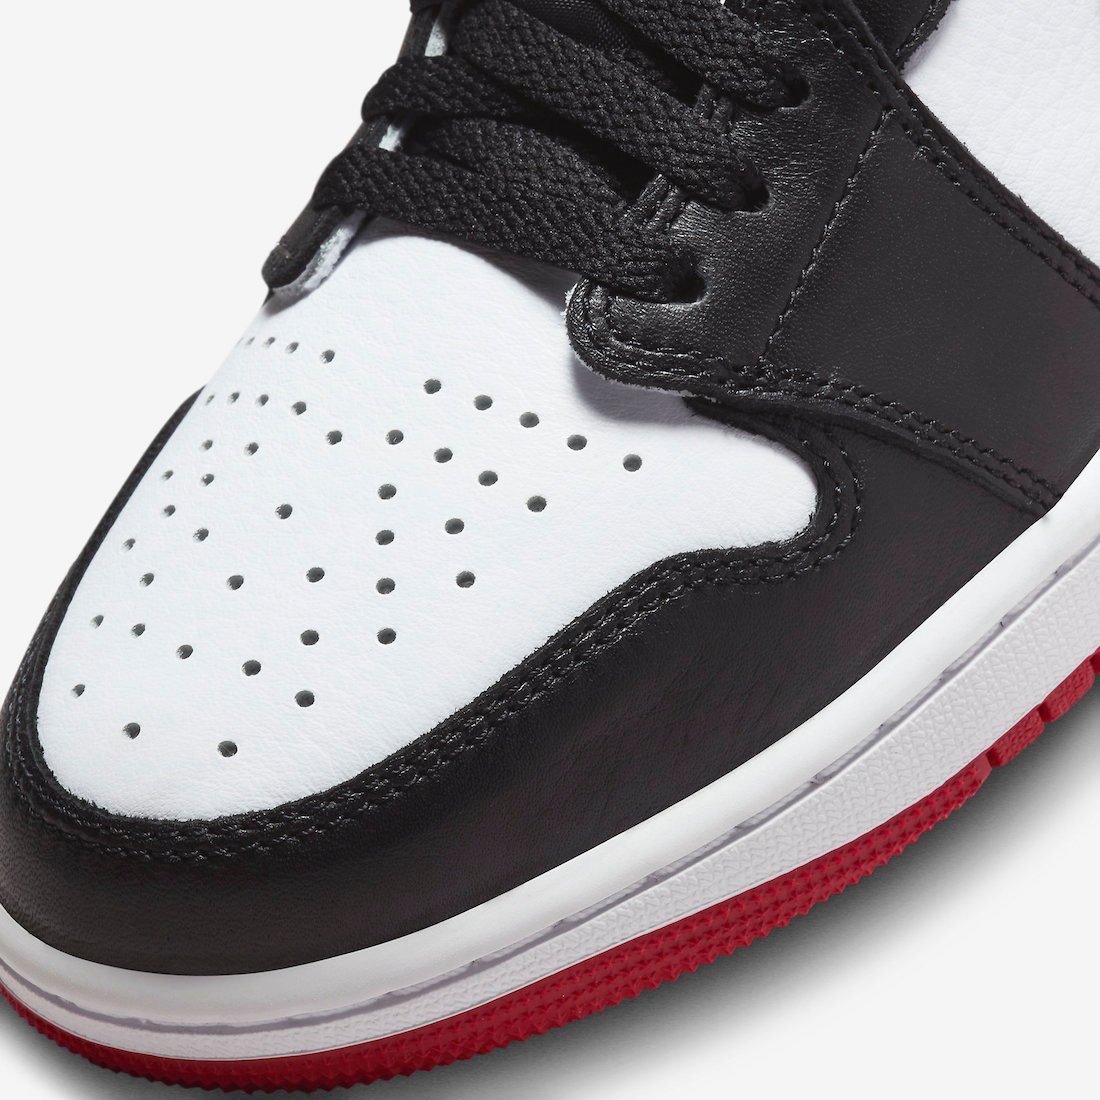 Air Jordan 1 Low OG Black Toe CZ0790-106 Release Date